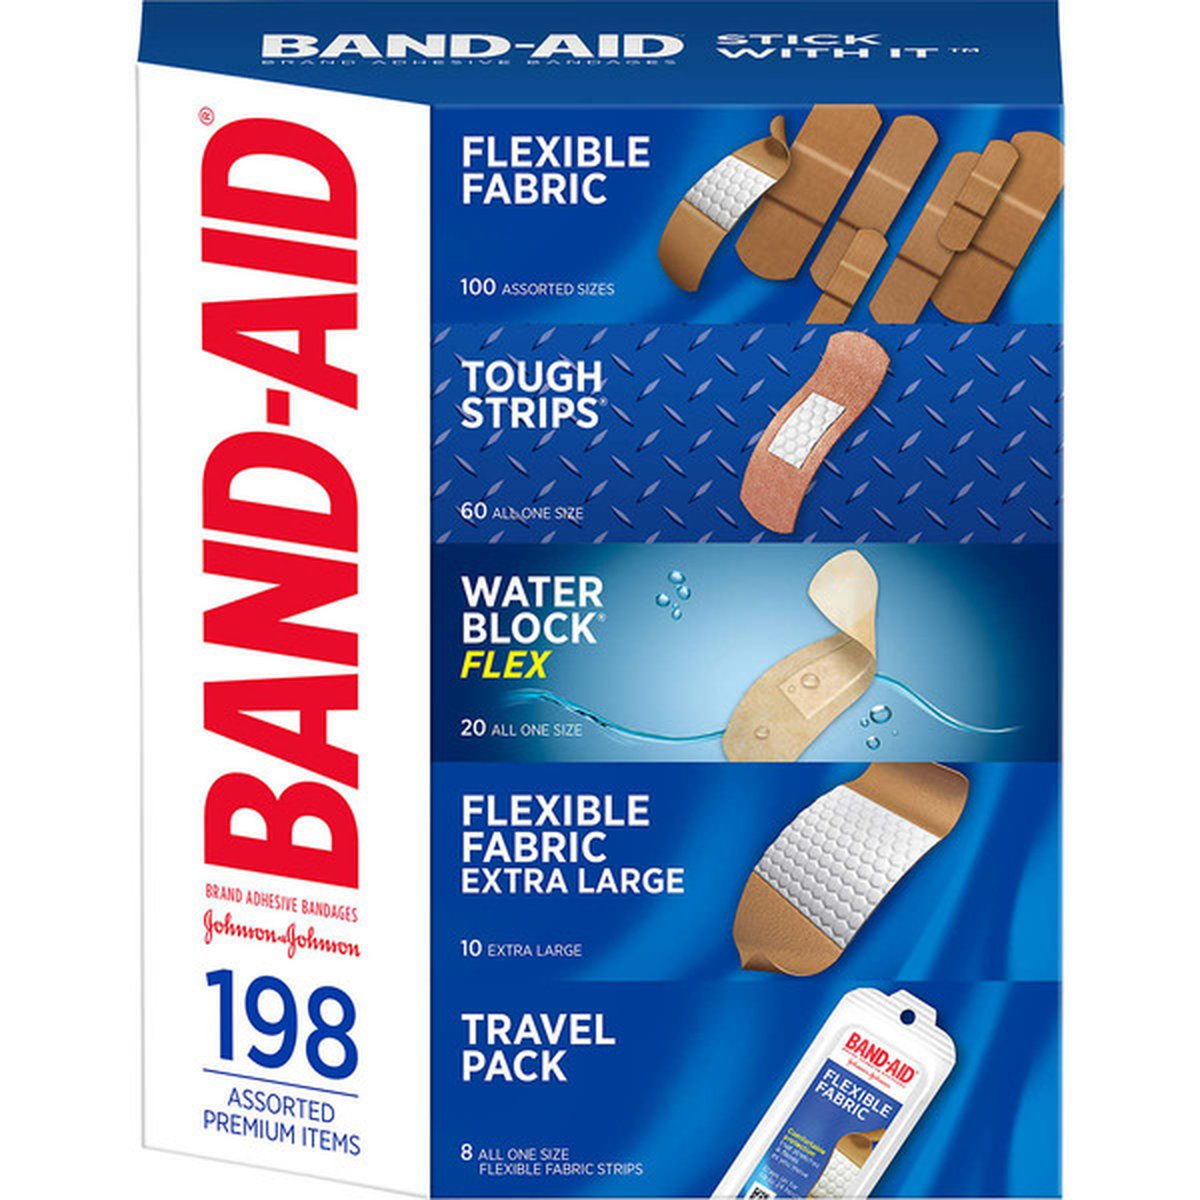 Band-Aid Adhesive Bandages Asst 198ct nq